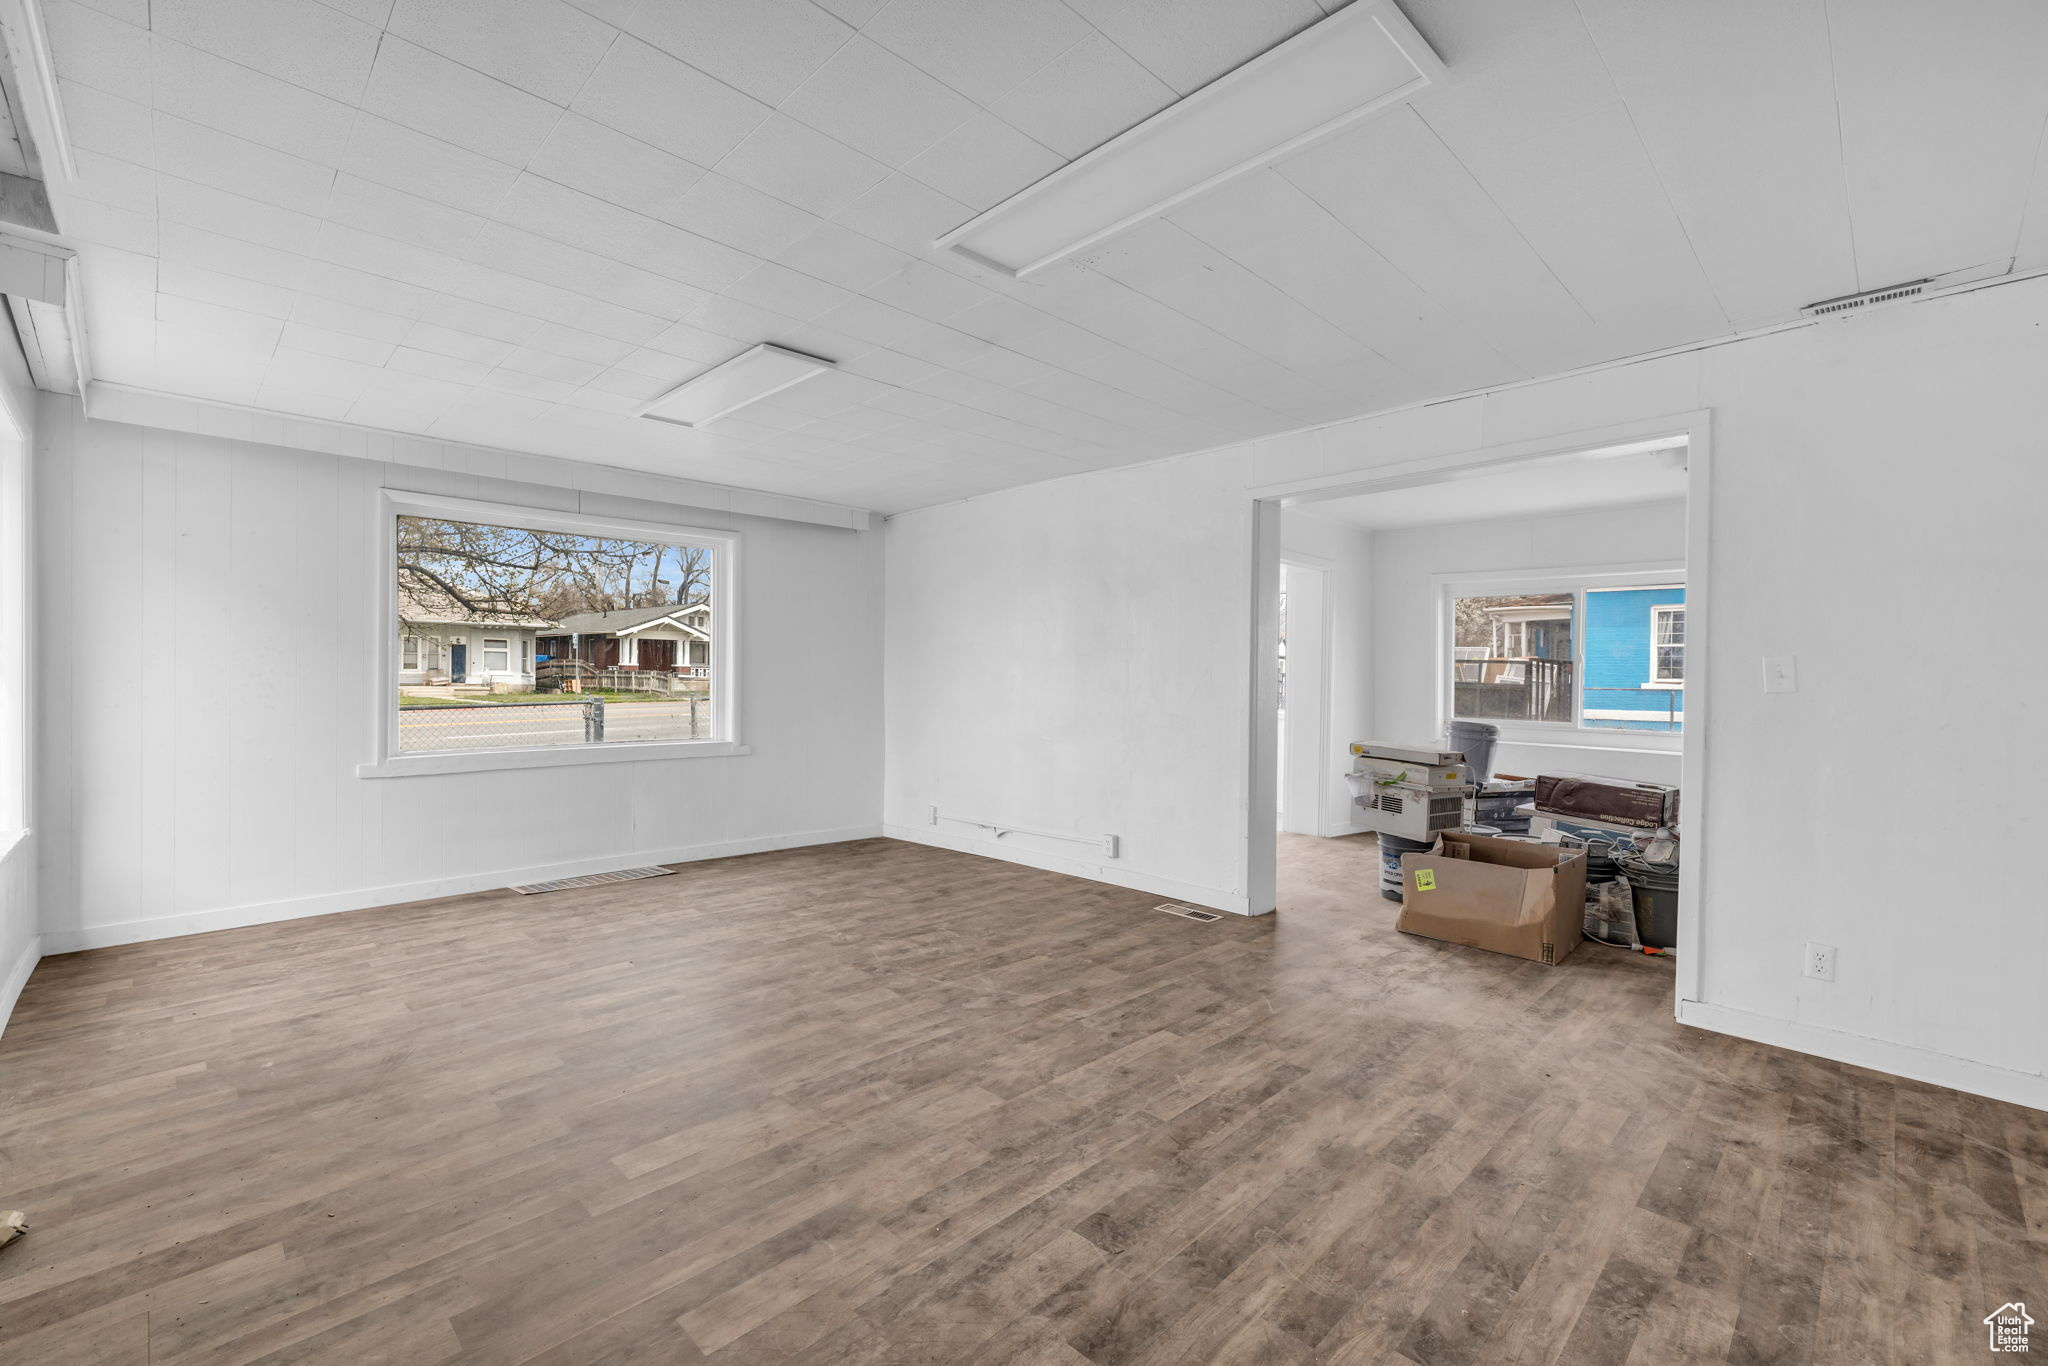 Unfurnished room featuring plenty of natural light and dark hardwood / wood-style floors